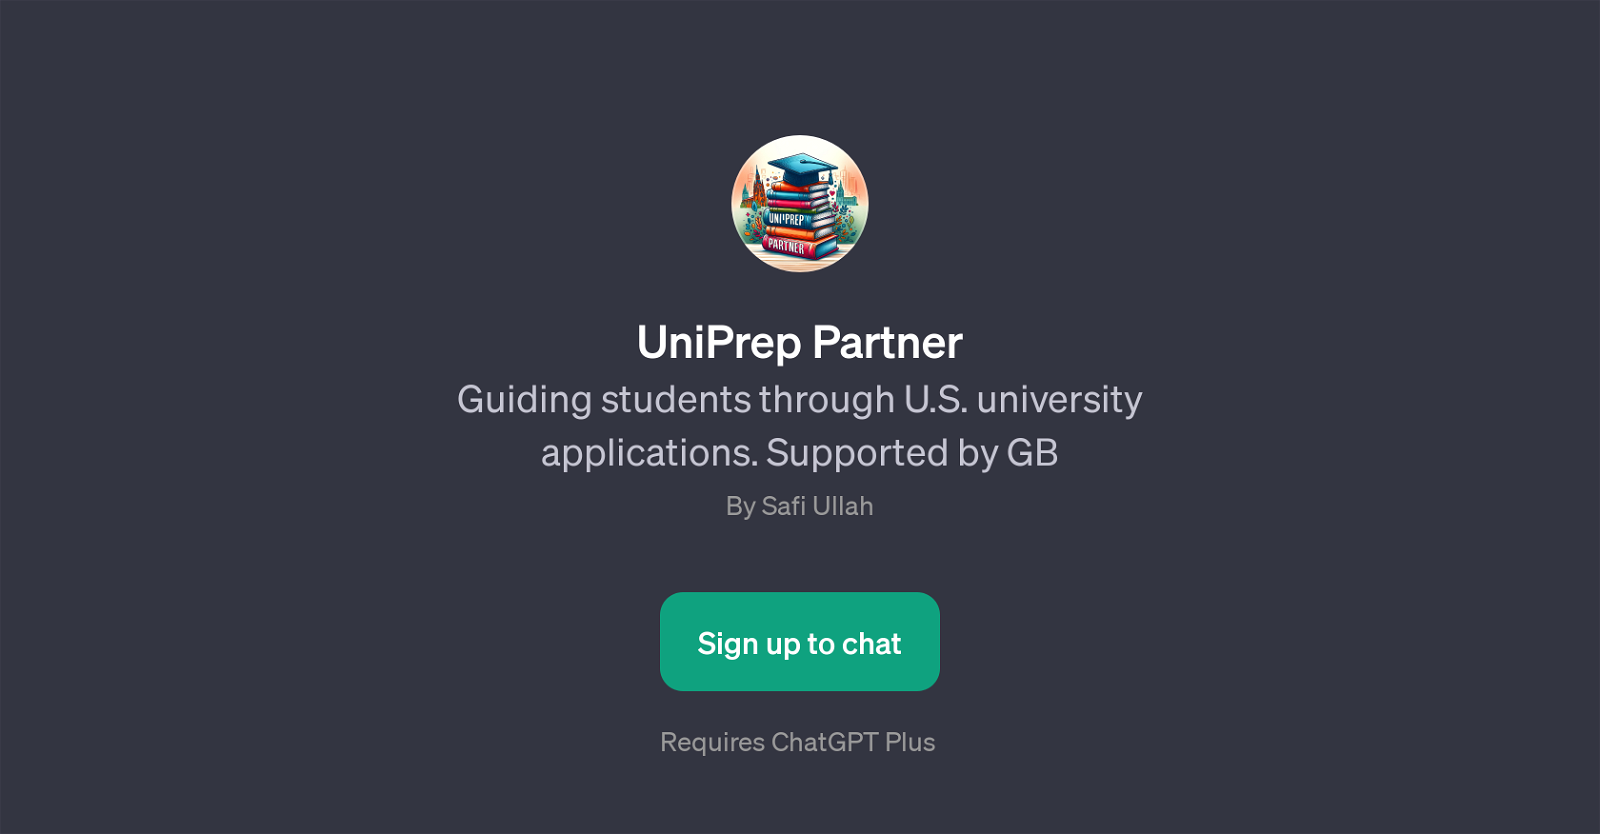 UniPrep Partner website